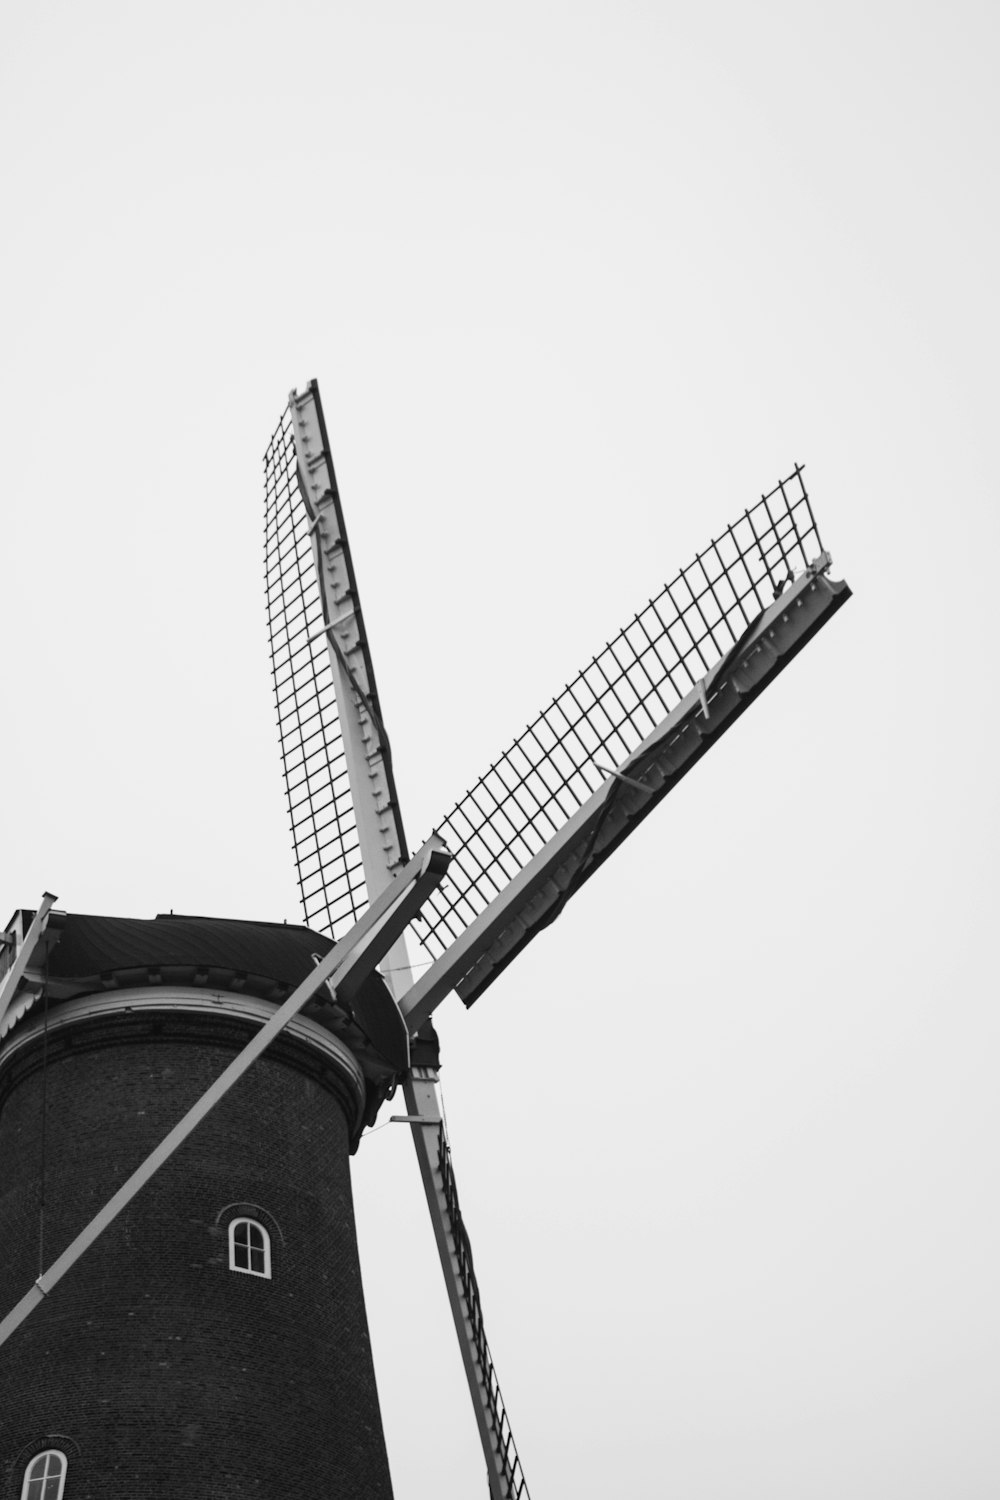 greyscale photo of windmill